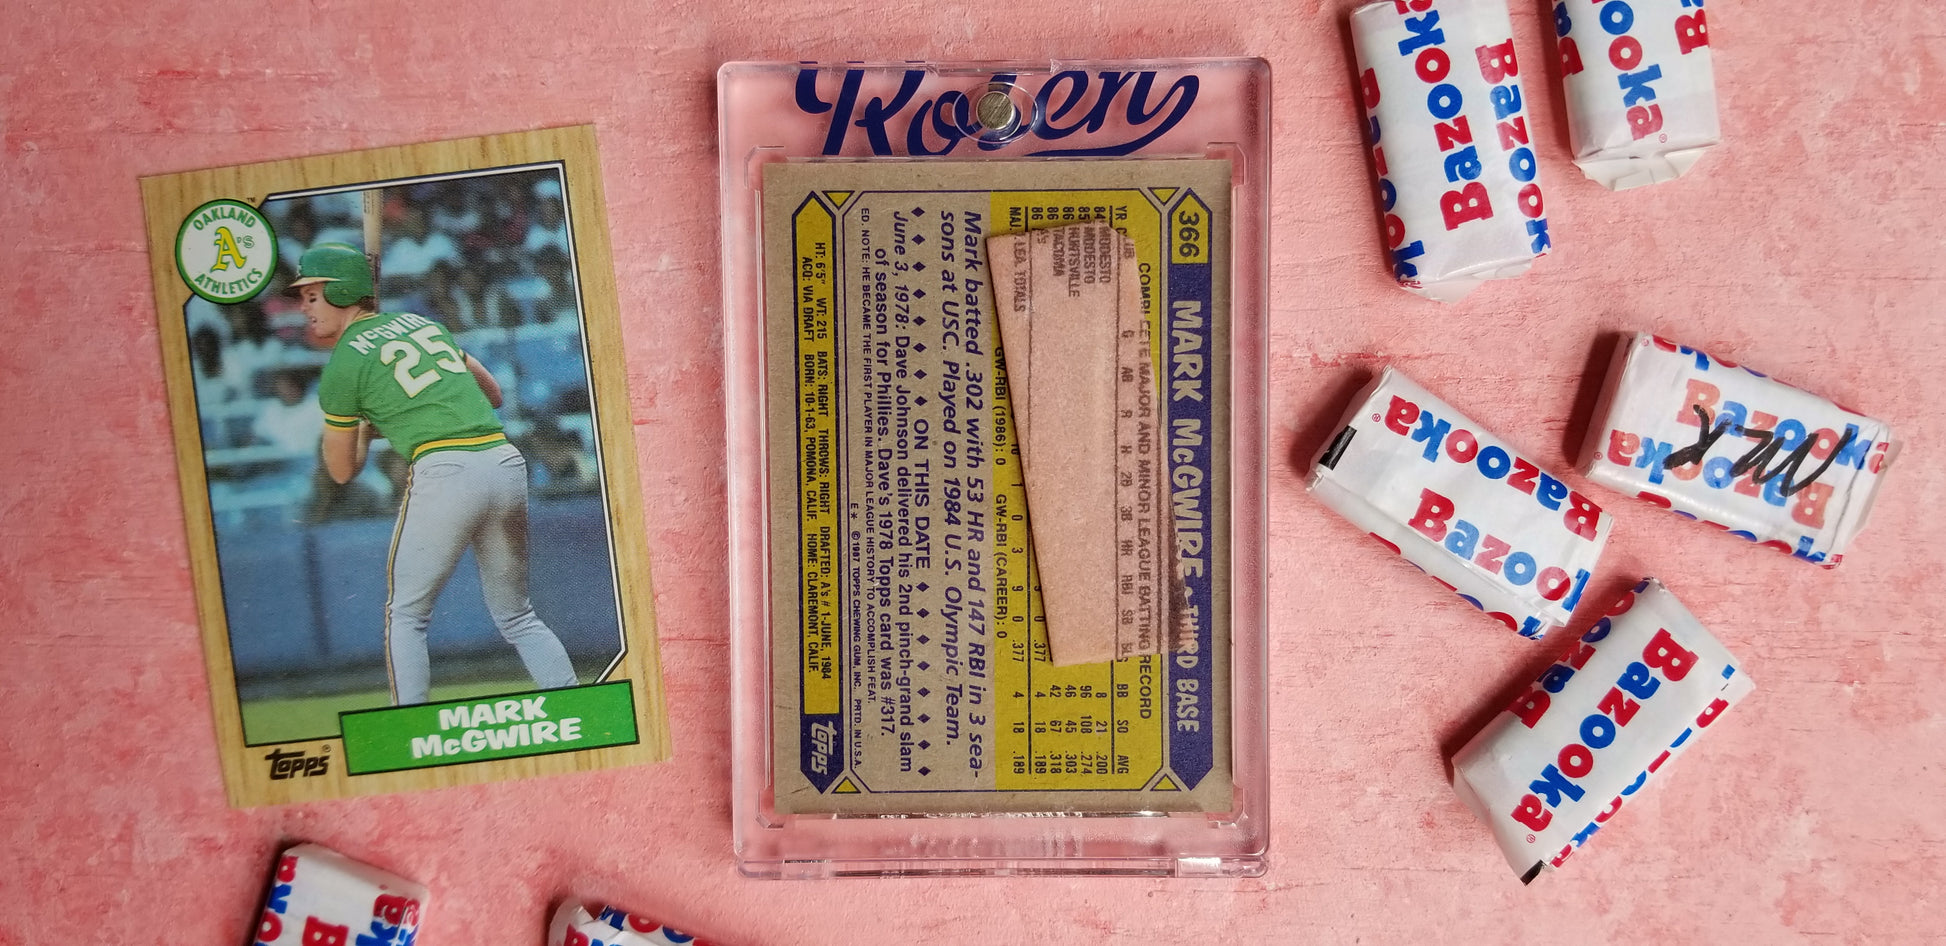 1987 Topps #366 Mark Mcgwire Rookie Baseball Card